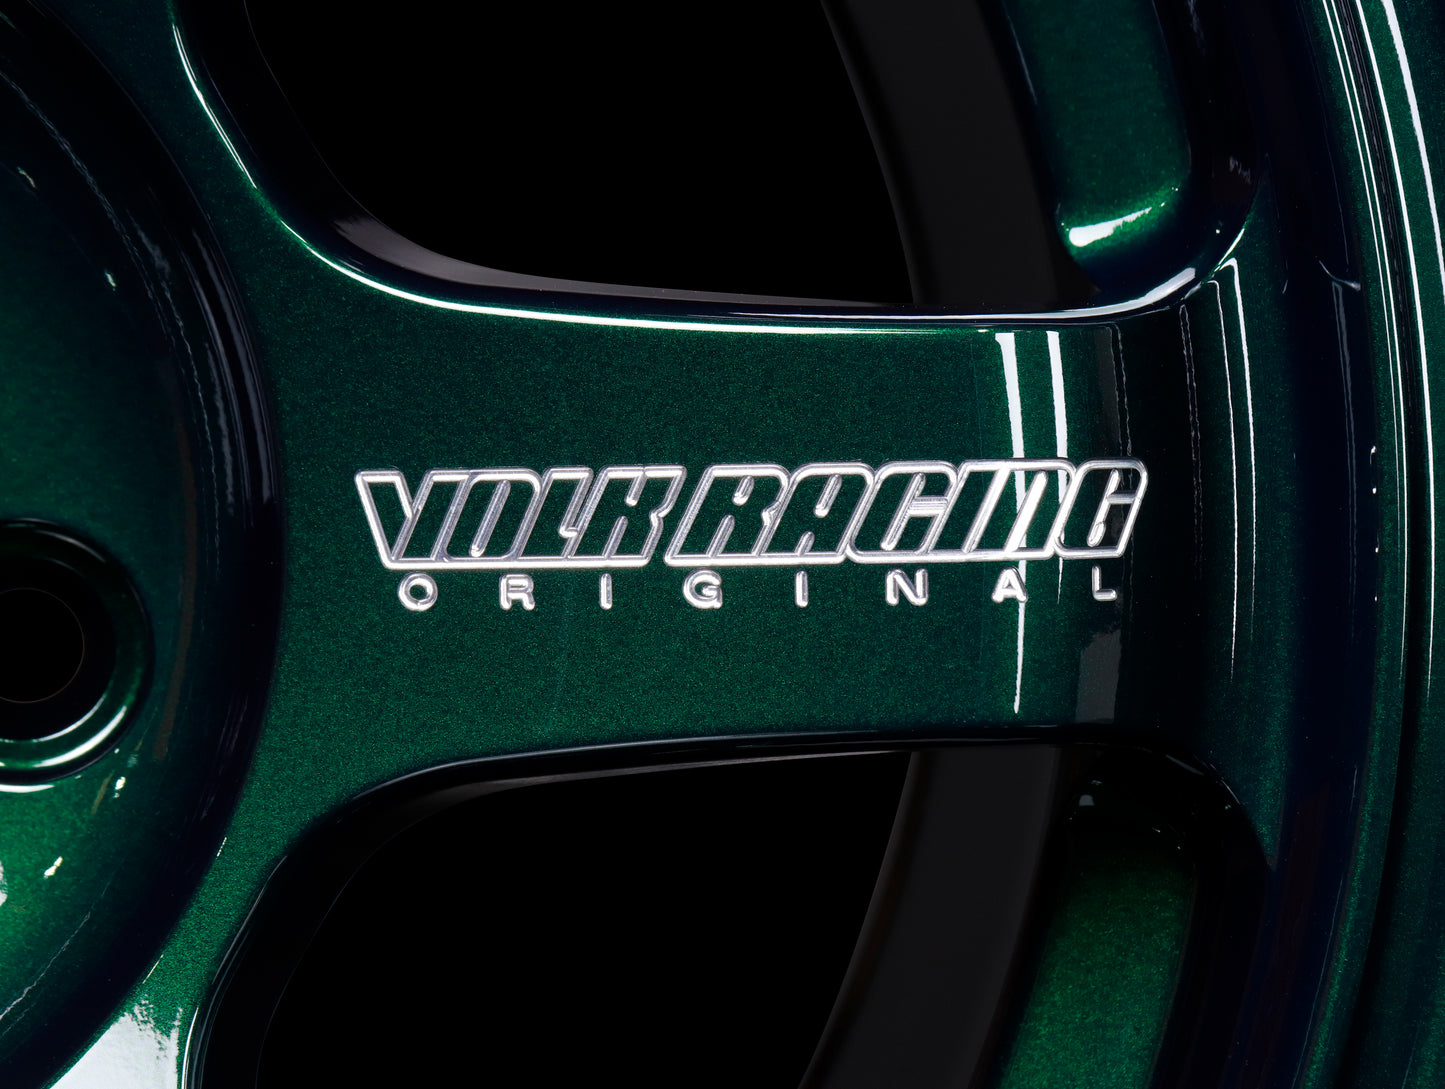 Volk Racing TE37 Saga S-Plus Wheels - Racing Green / 15x8 / 4x100 / +35